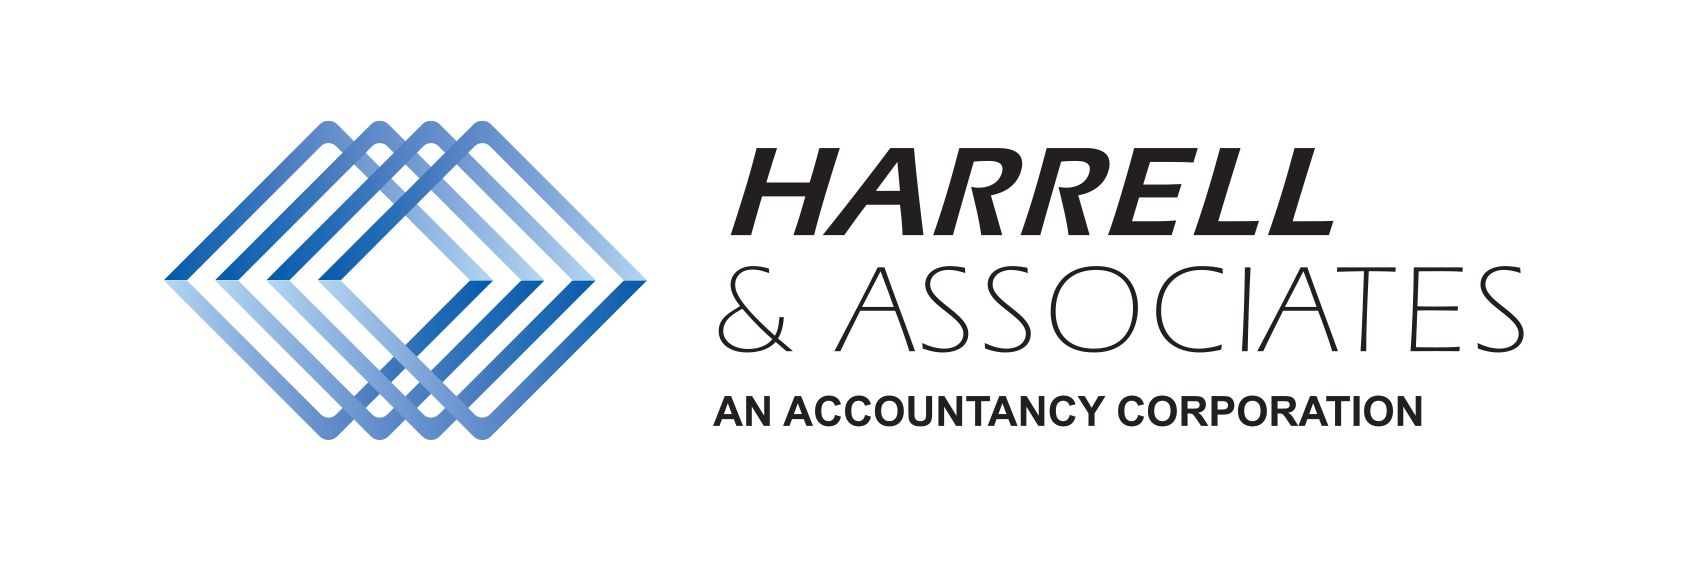 Harrell  Logo for websites oct 2021.png